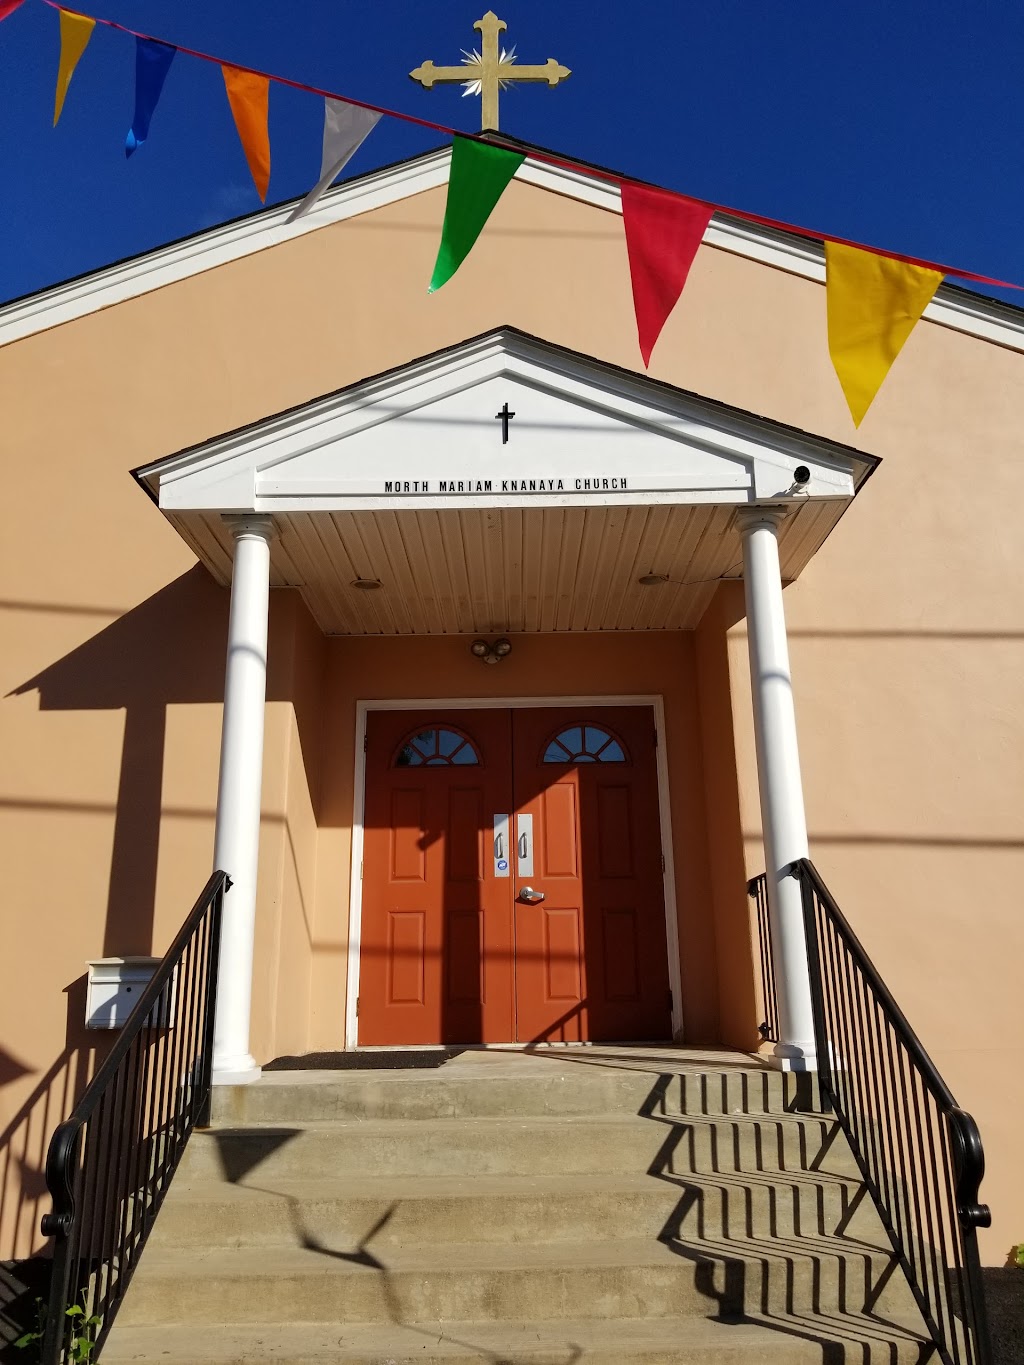 St Marys Knanaya Church | 701 Byberry Rd, Philadelphia, PA 19116 | Phone: (215) 464-9566